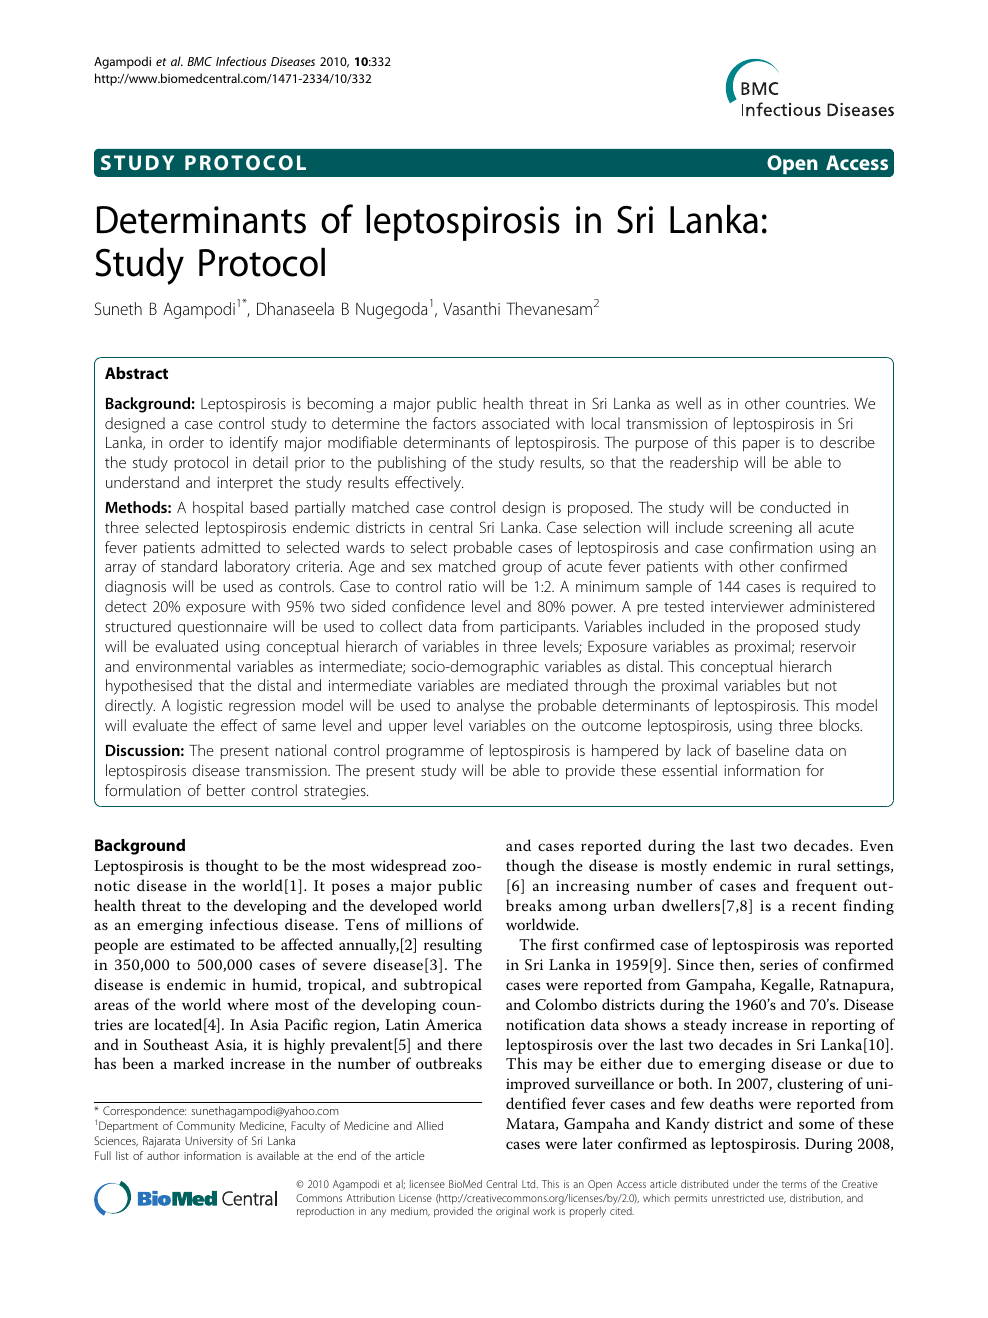 Determinants of leptospirosis in Sri Lanka Study Protocol picture